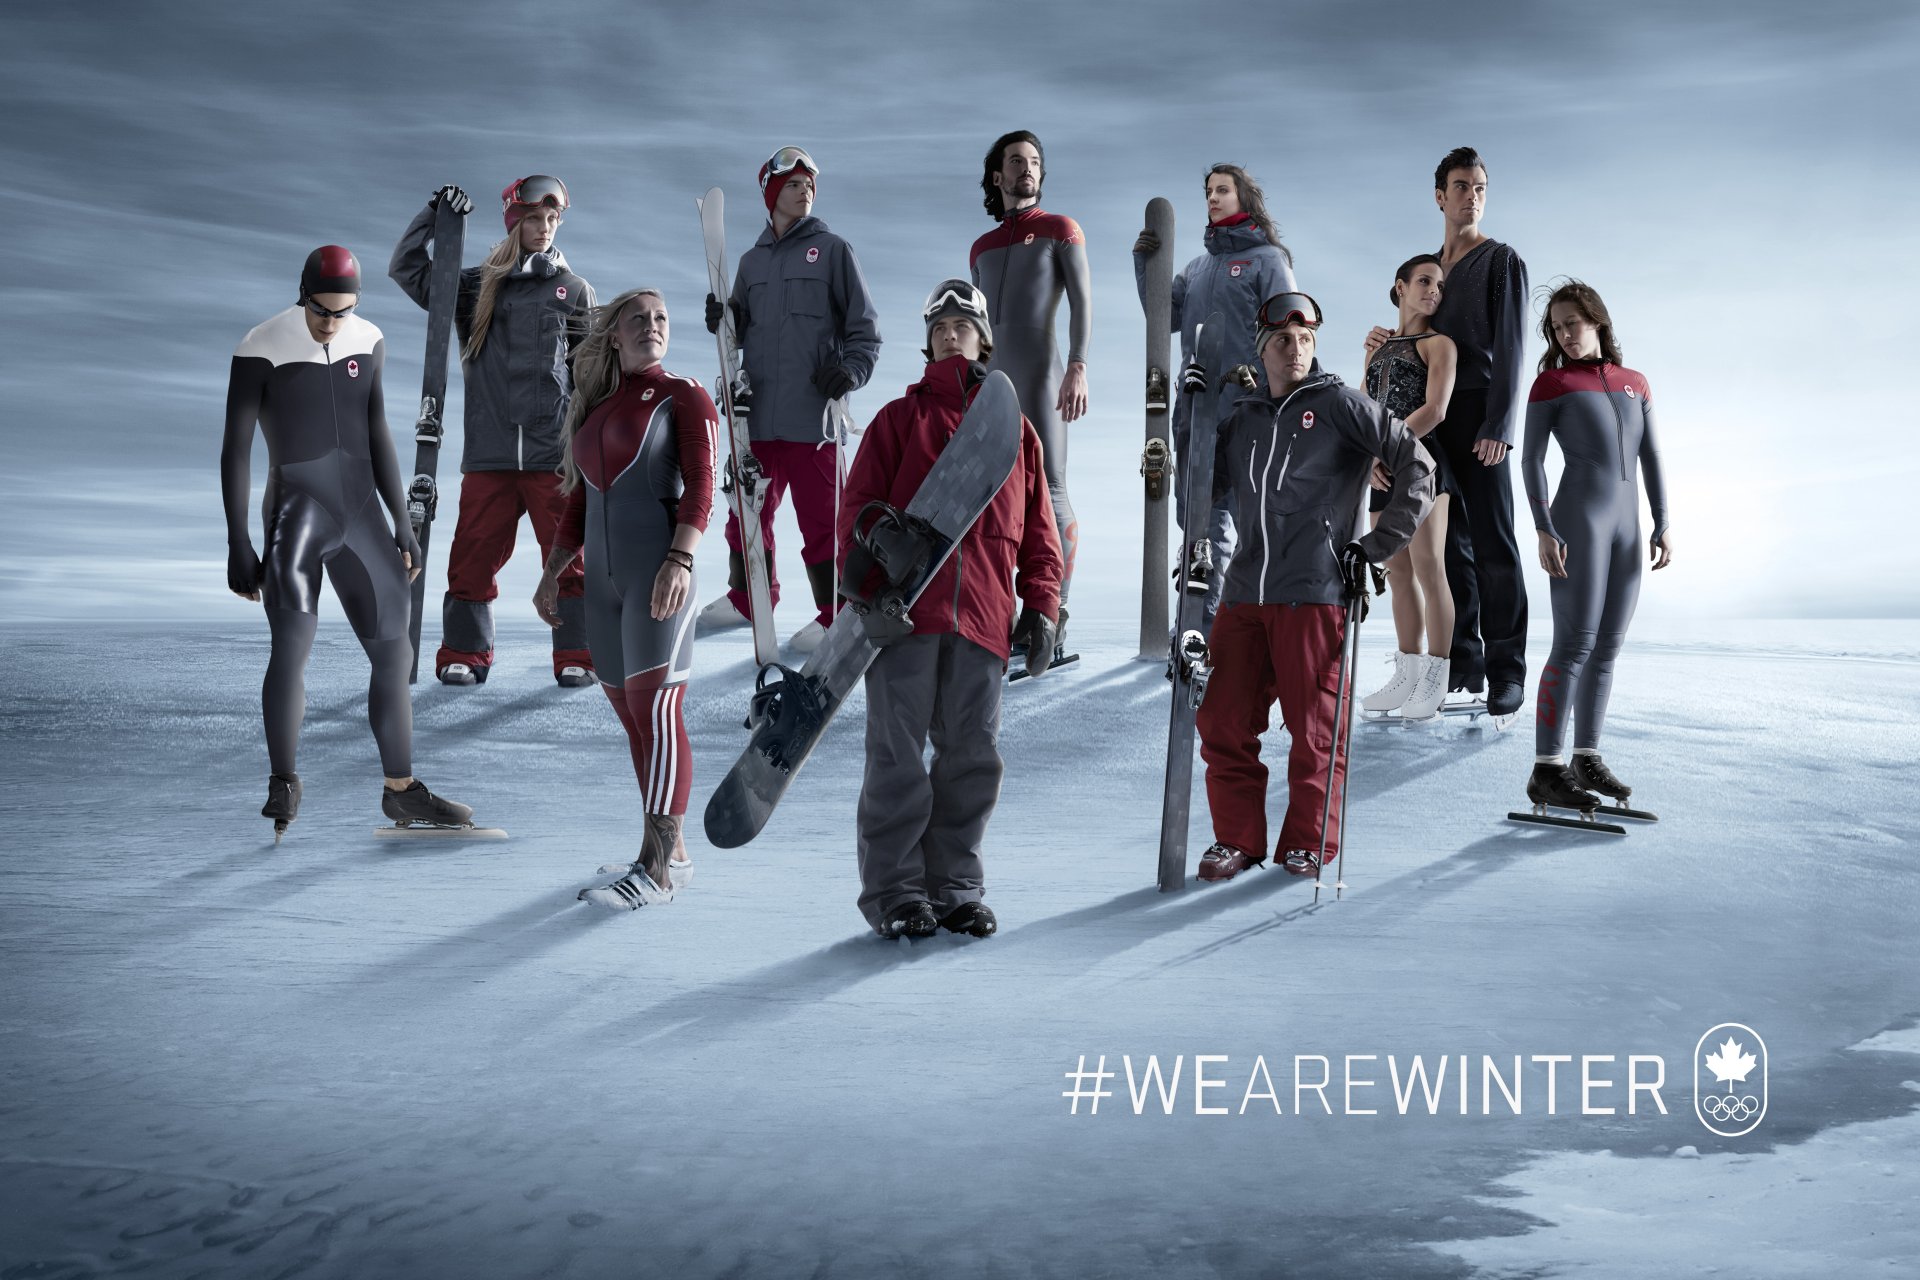 wearewinter мы зимой канада канадский олимпийской сборной сочи олимпийский канадский 2014